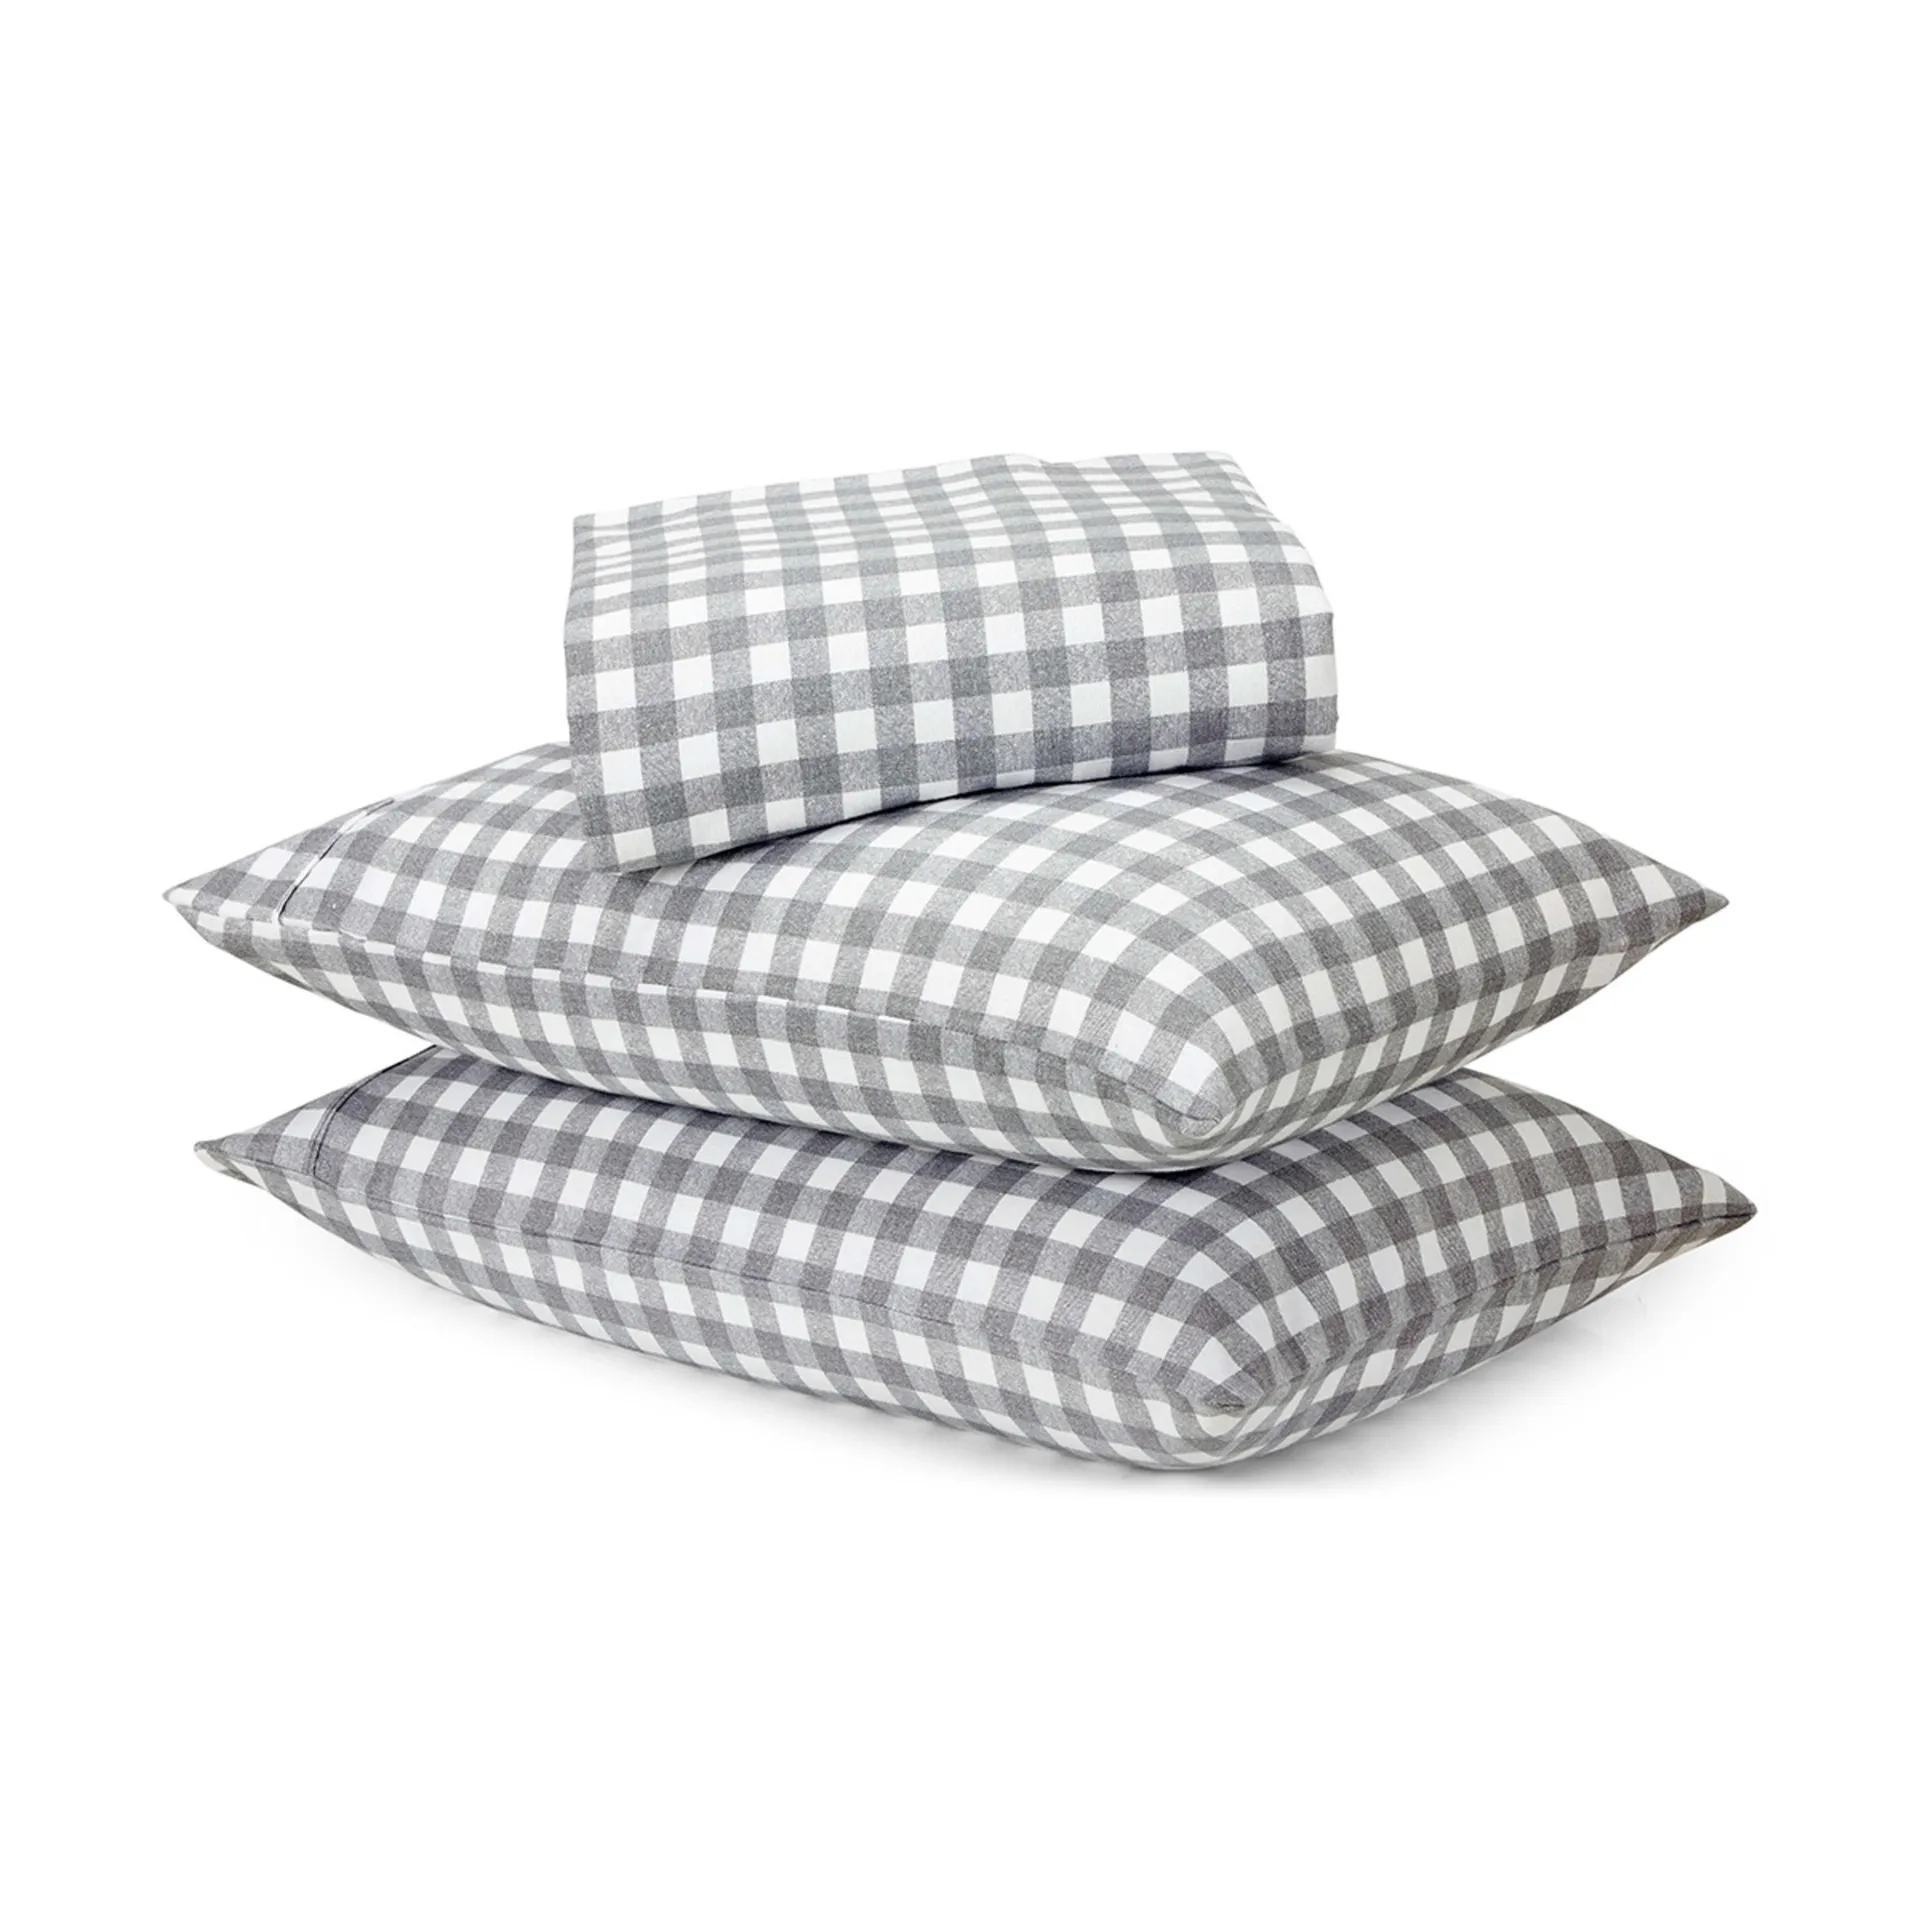 Gingham Cotton Flannelette Sheet Set - Queen Bed, Grey